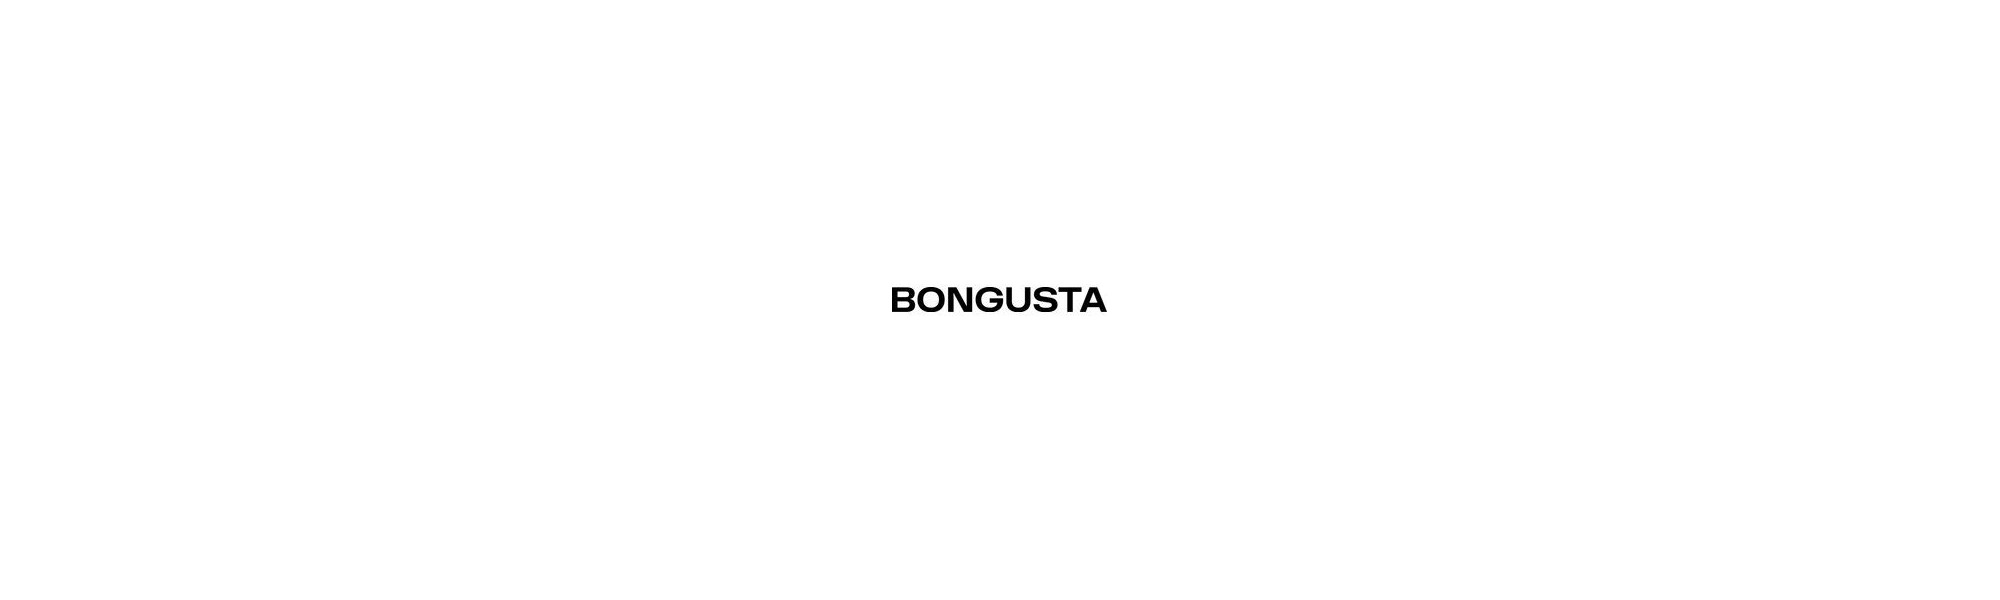 Bongusta